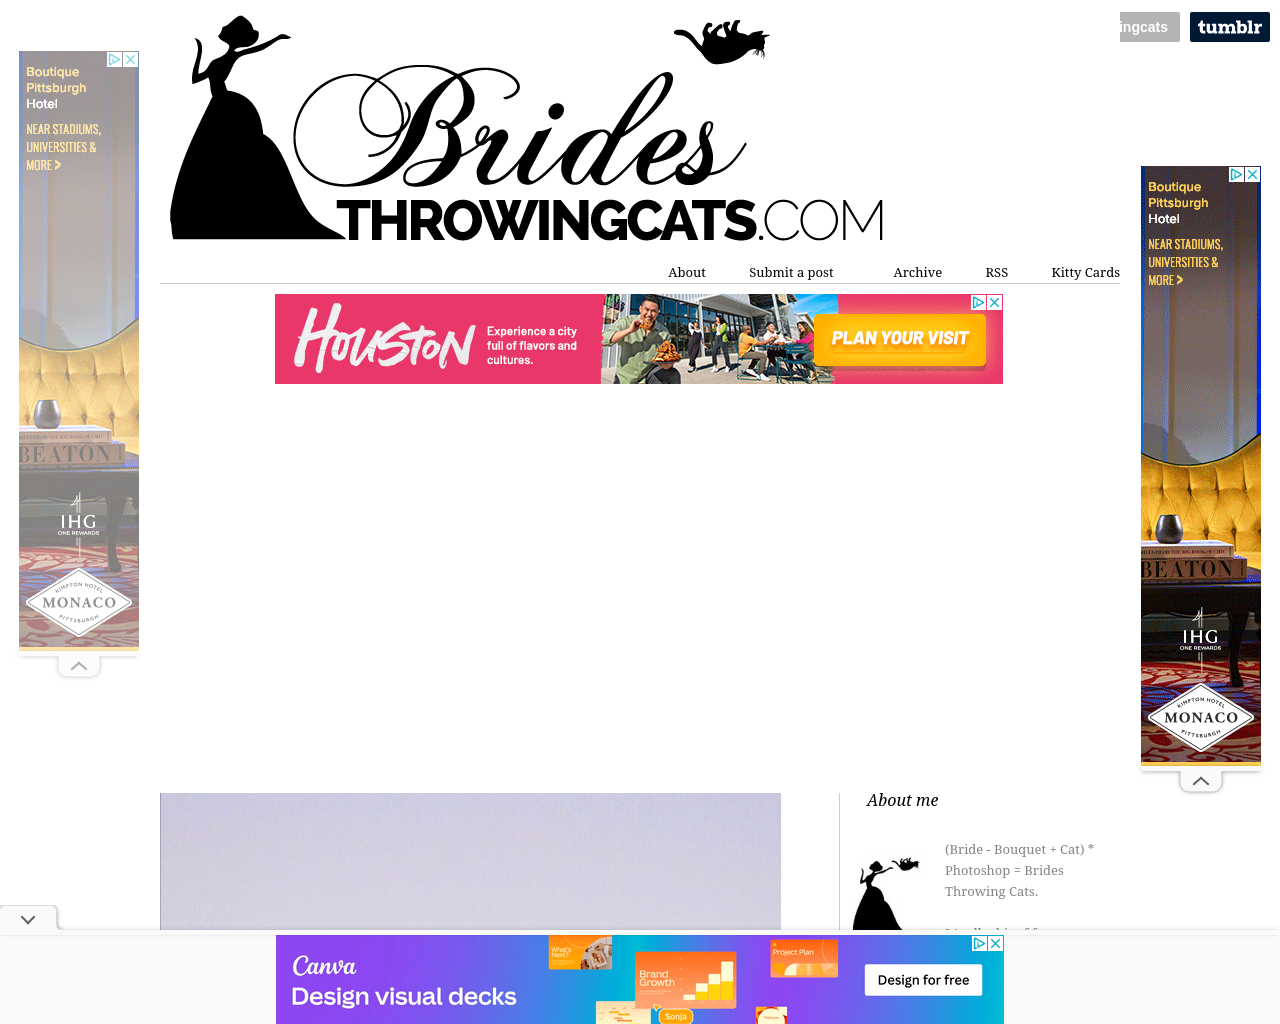 bridesthrowingcats.com